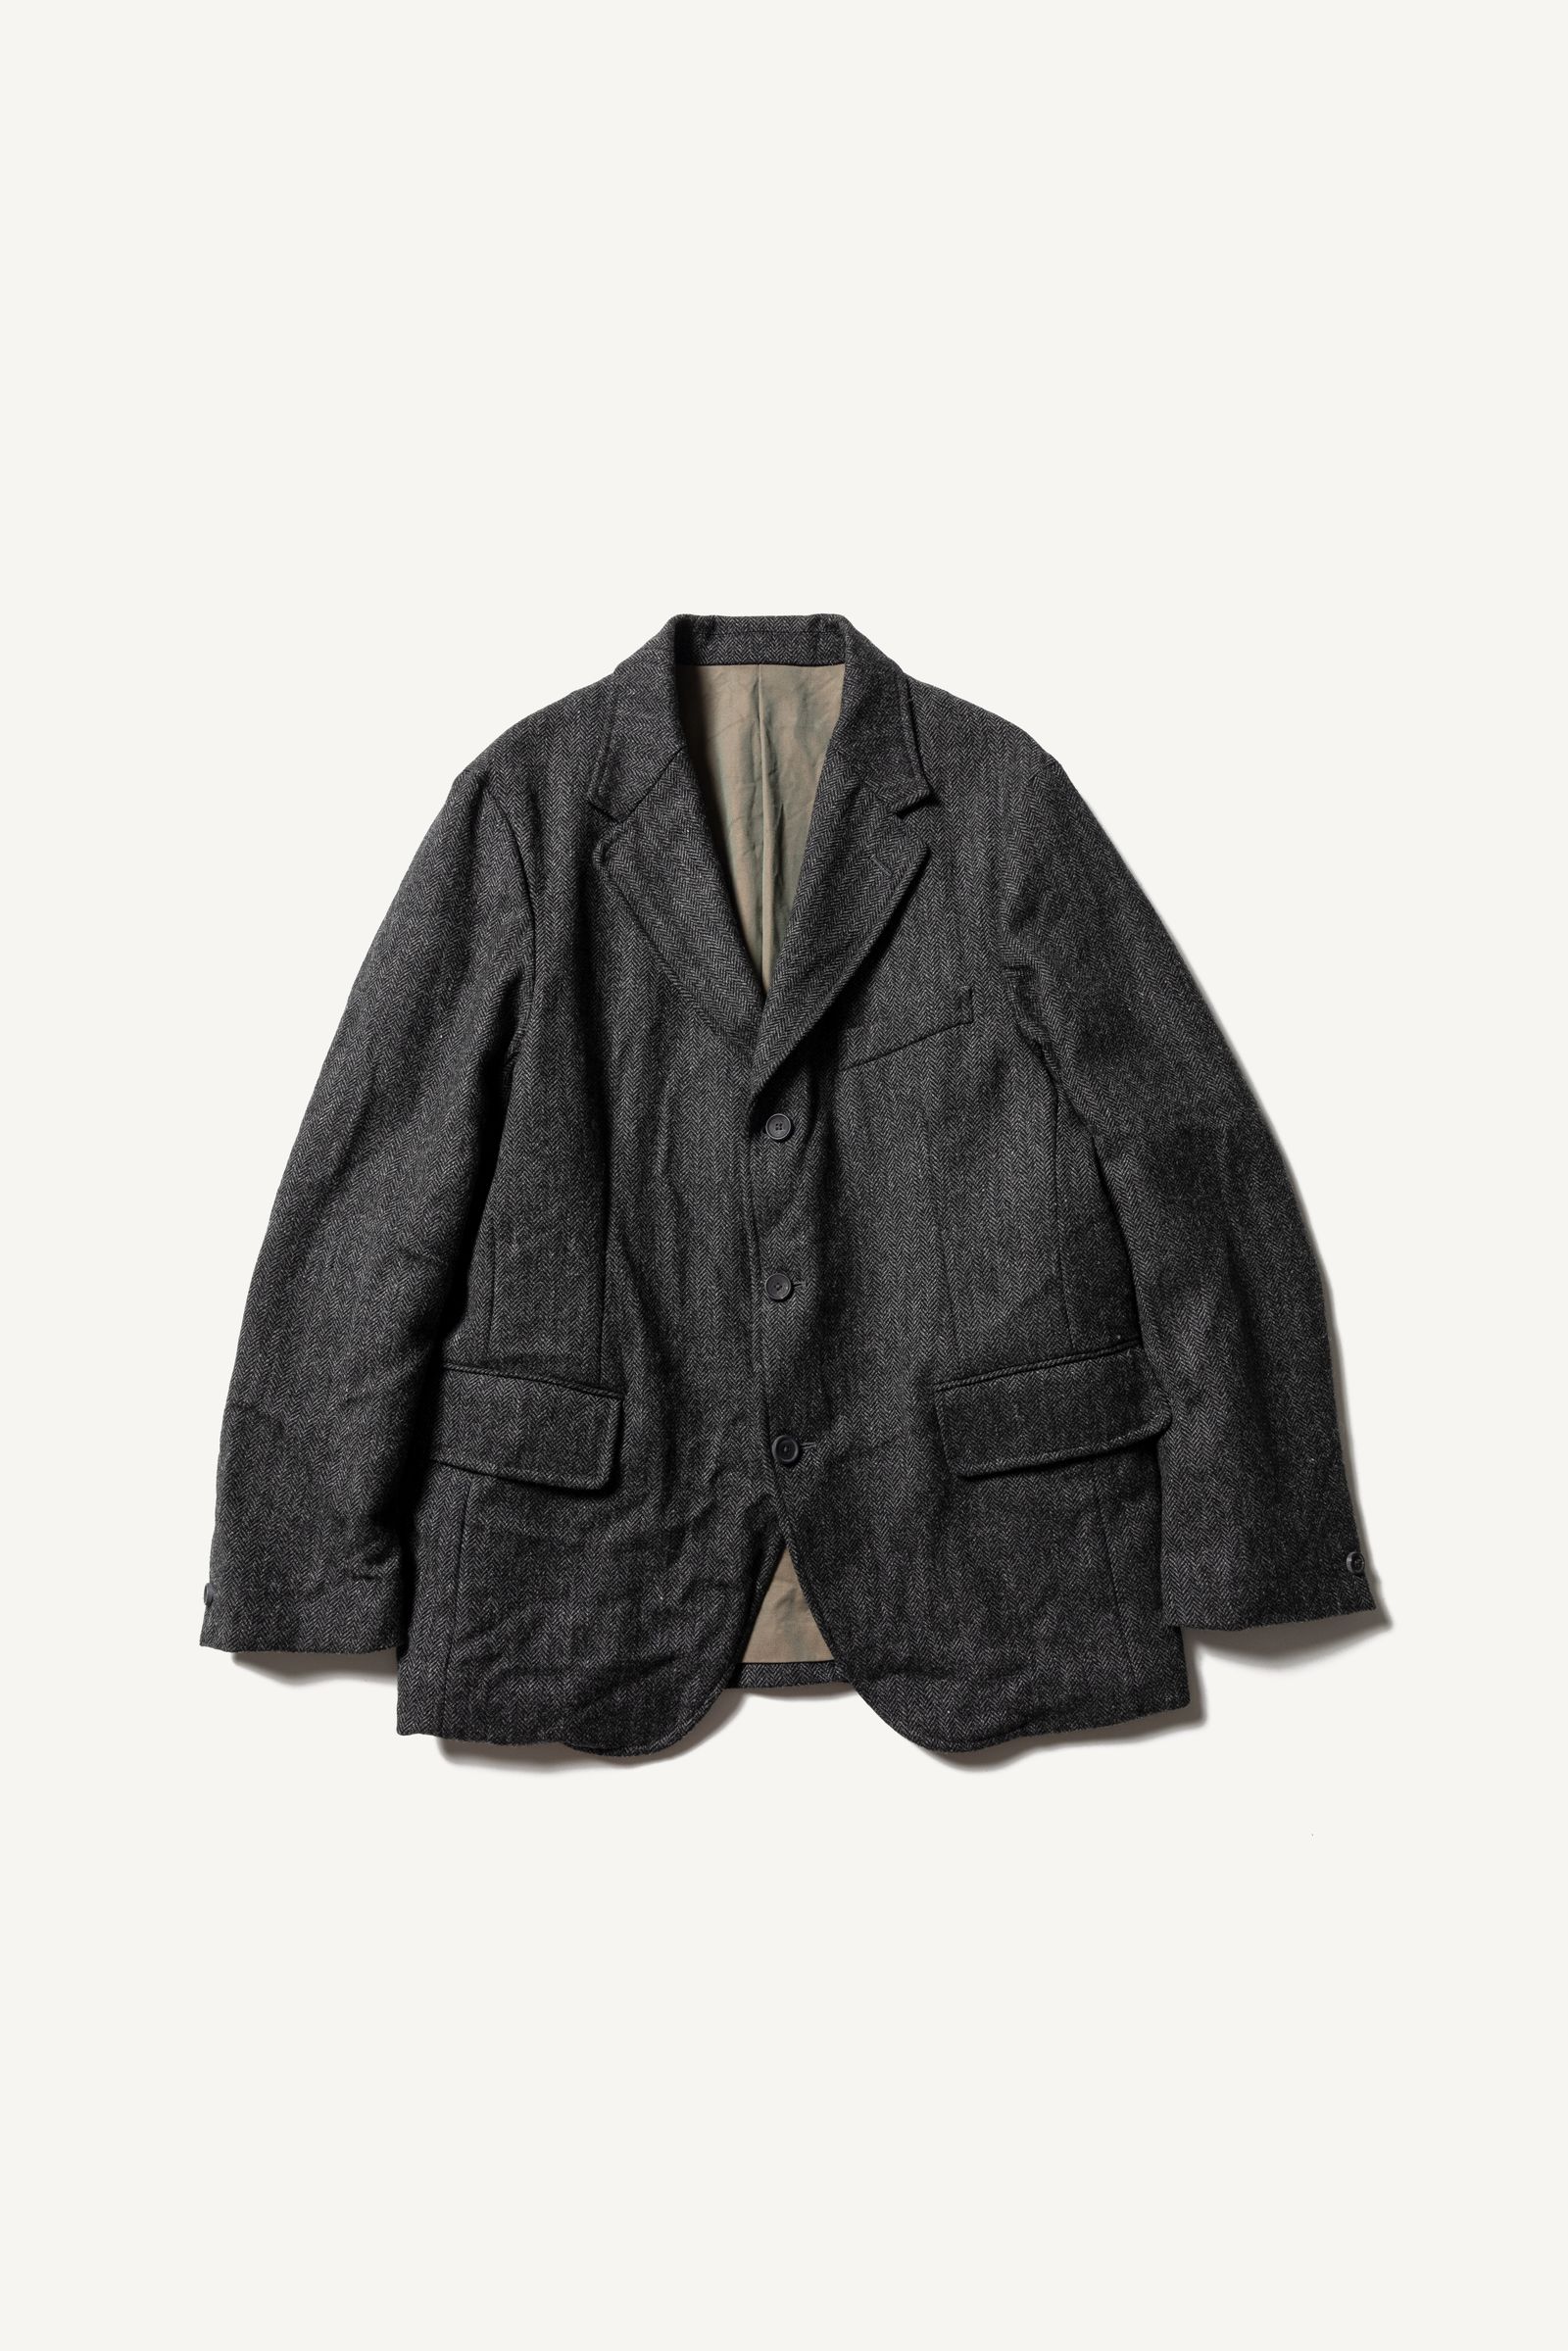 A.PRESSE 22FW Tweed Tailored Jacket セット